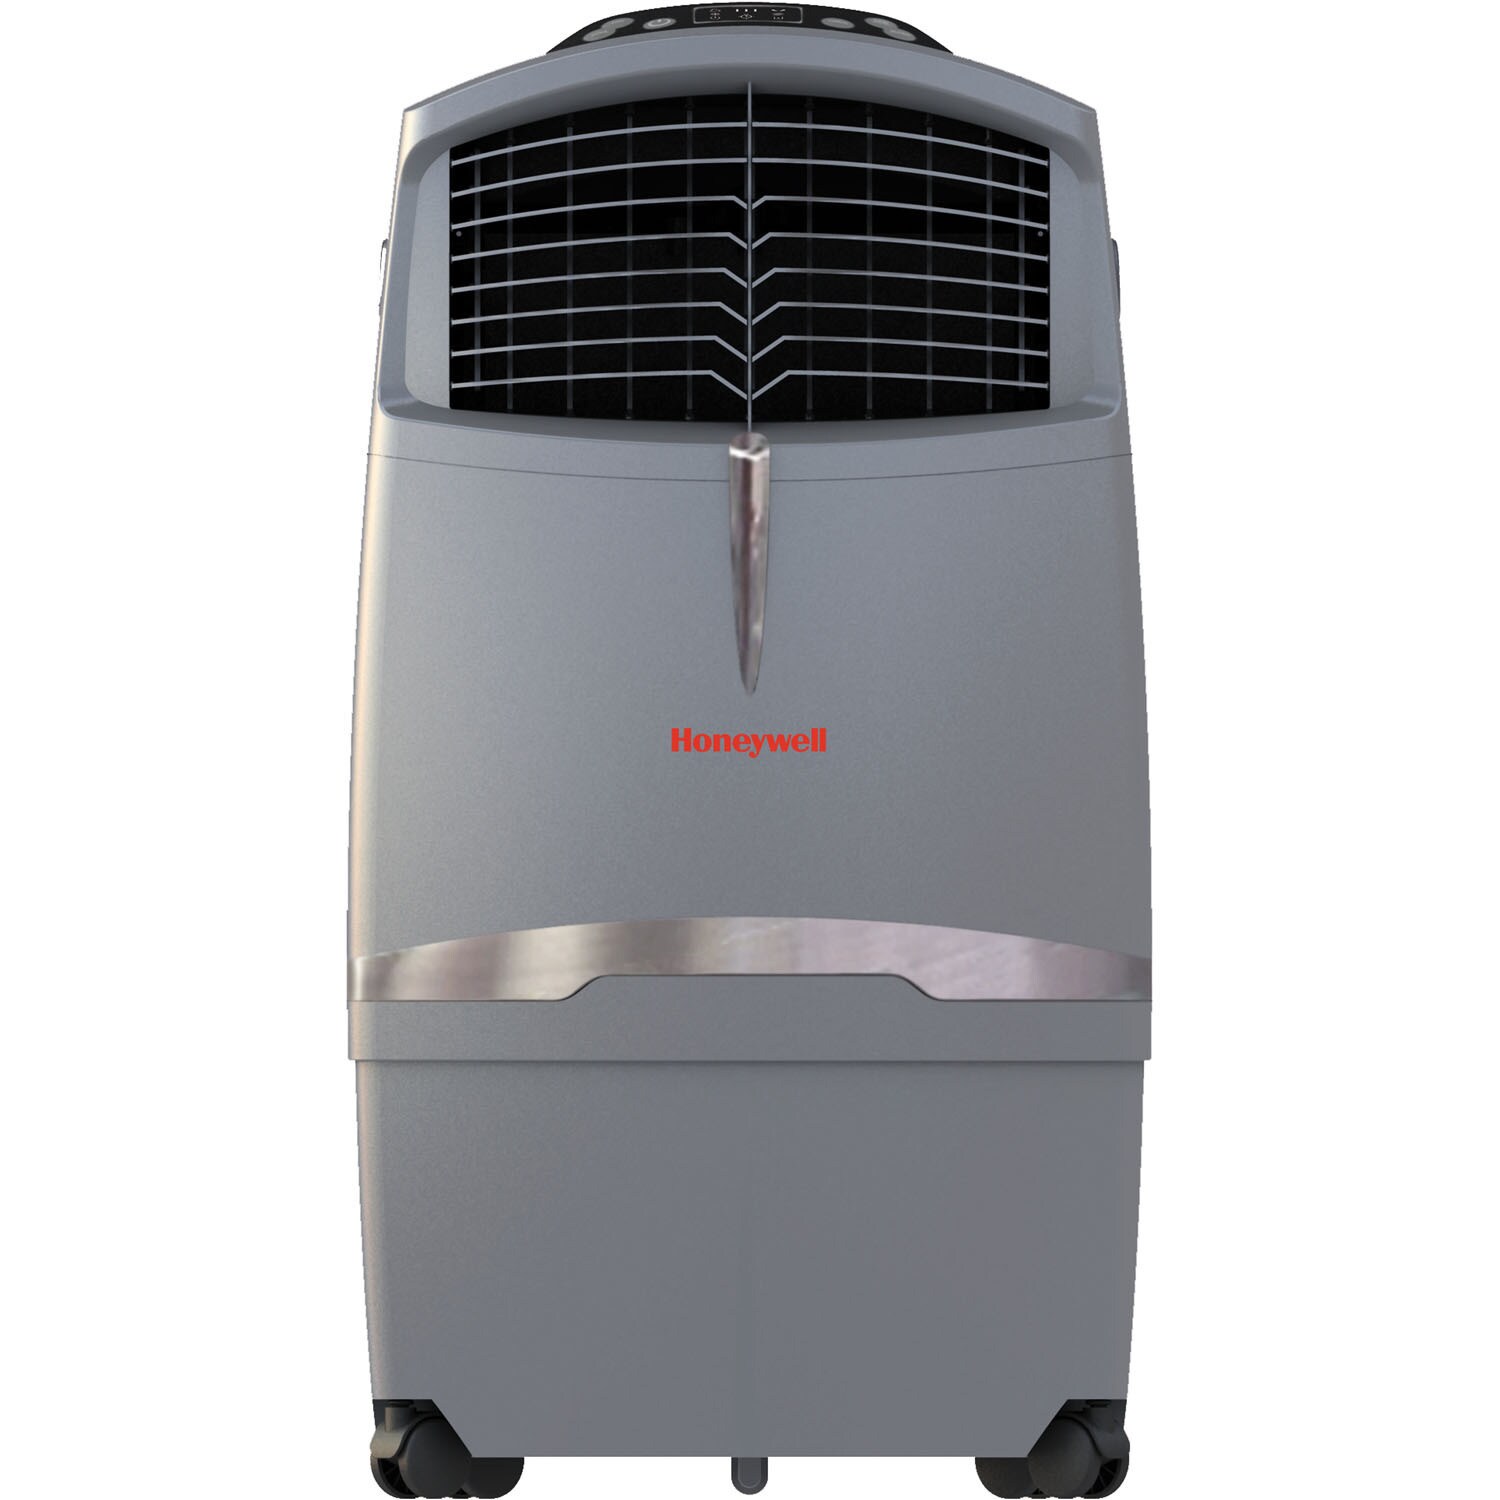 honeywell evaporative air cooler